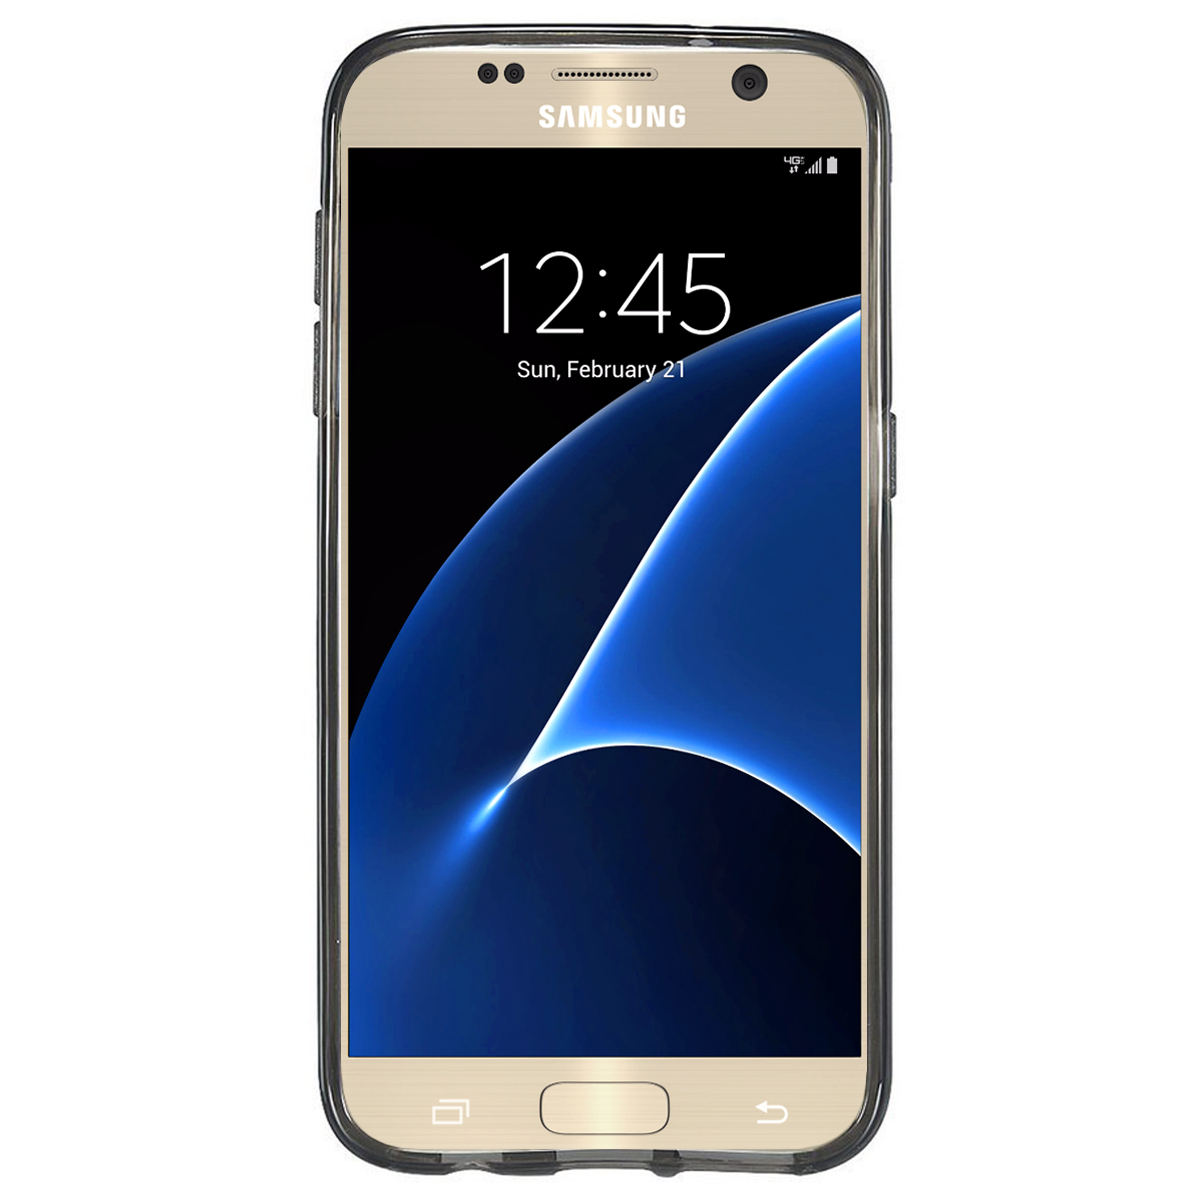 Base High Gloss TPU Case Samsung Galaxy S7 - Smoke (OLD VERSION)